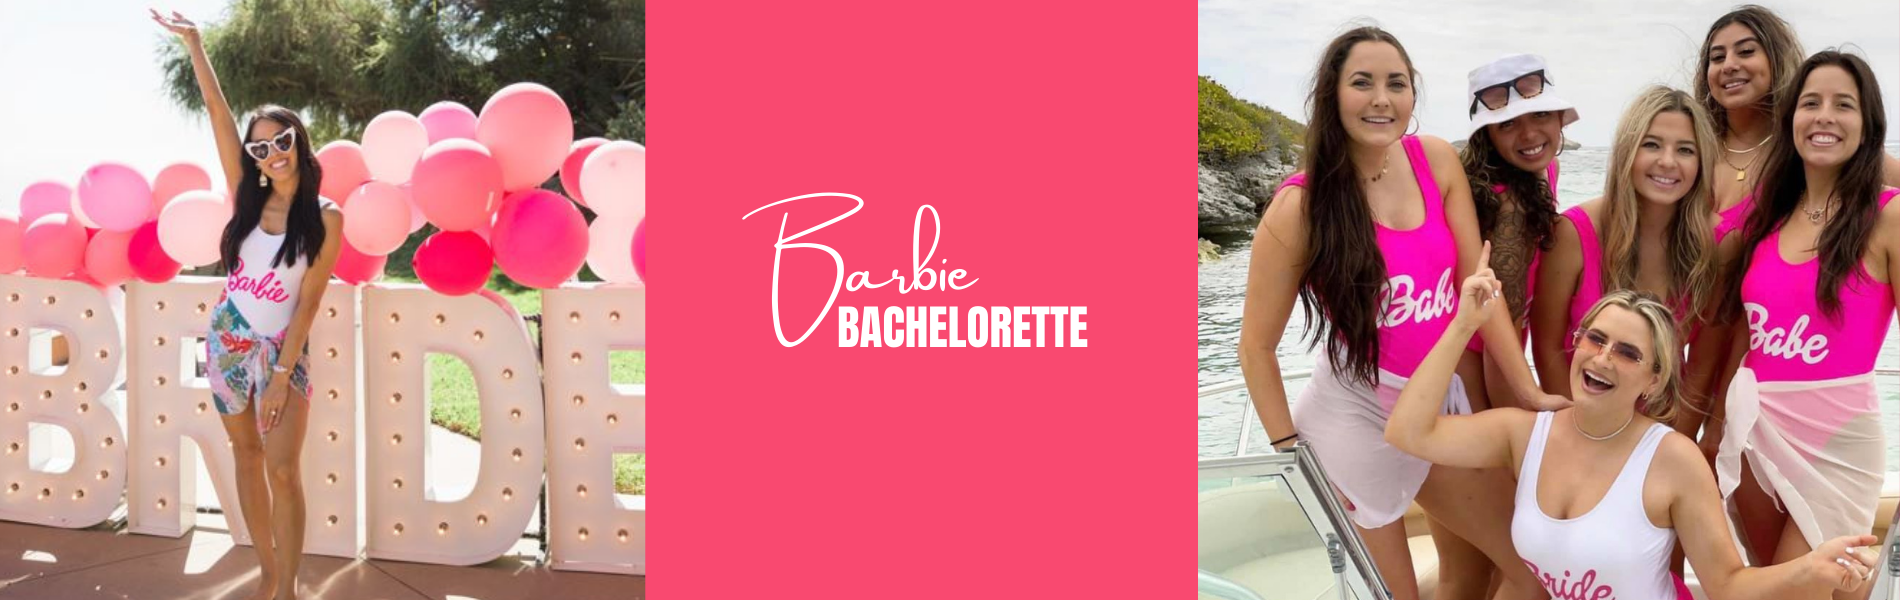 Barbie bachelorette party swimsuits